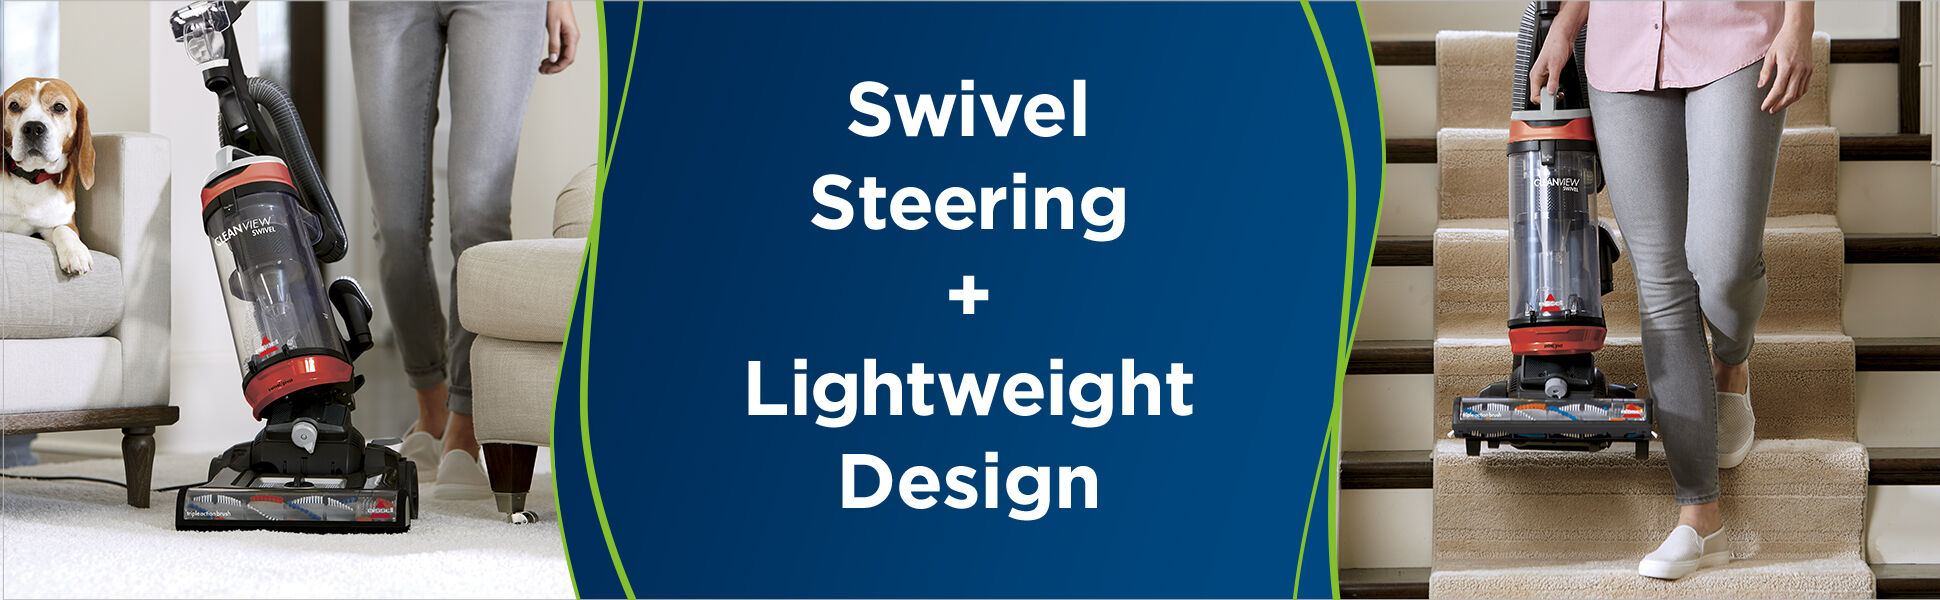 Left Picture: CleanView Swivel Pet Vac swivel demo. Right Picture: CleanView Pet Vac lightweight design demo. Text: Swivel Steering + Lightweight Design